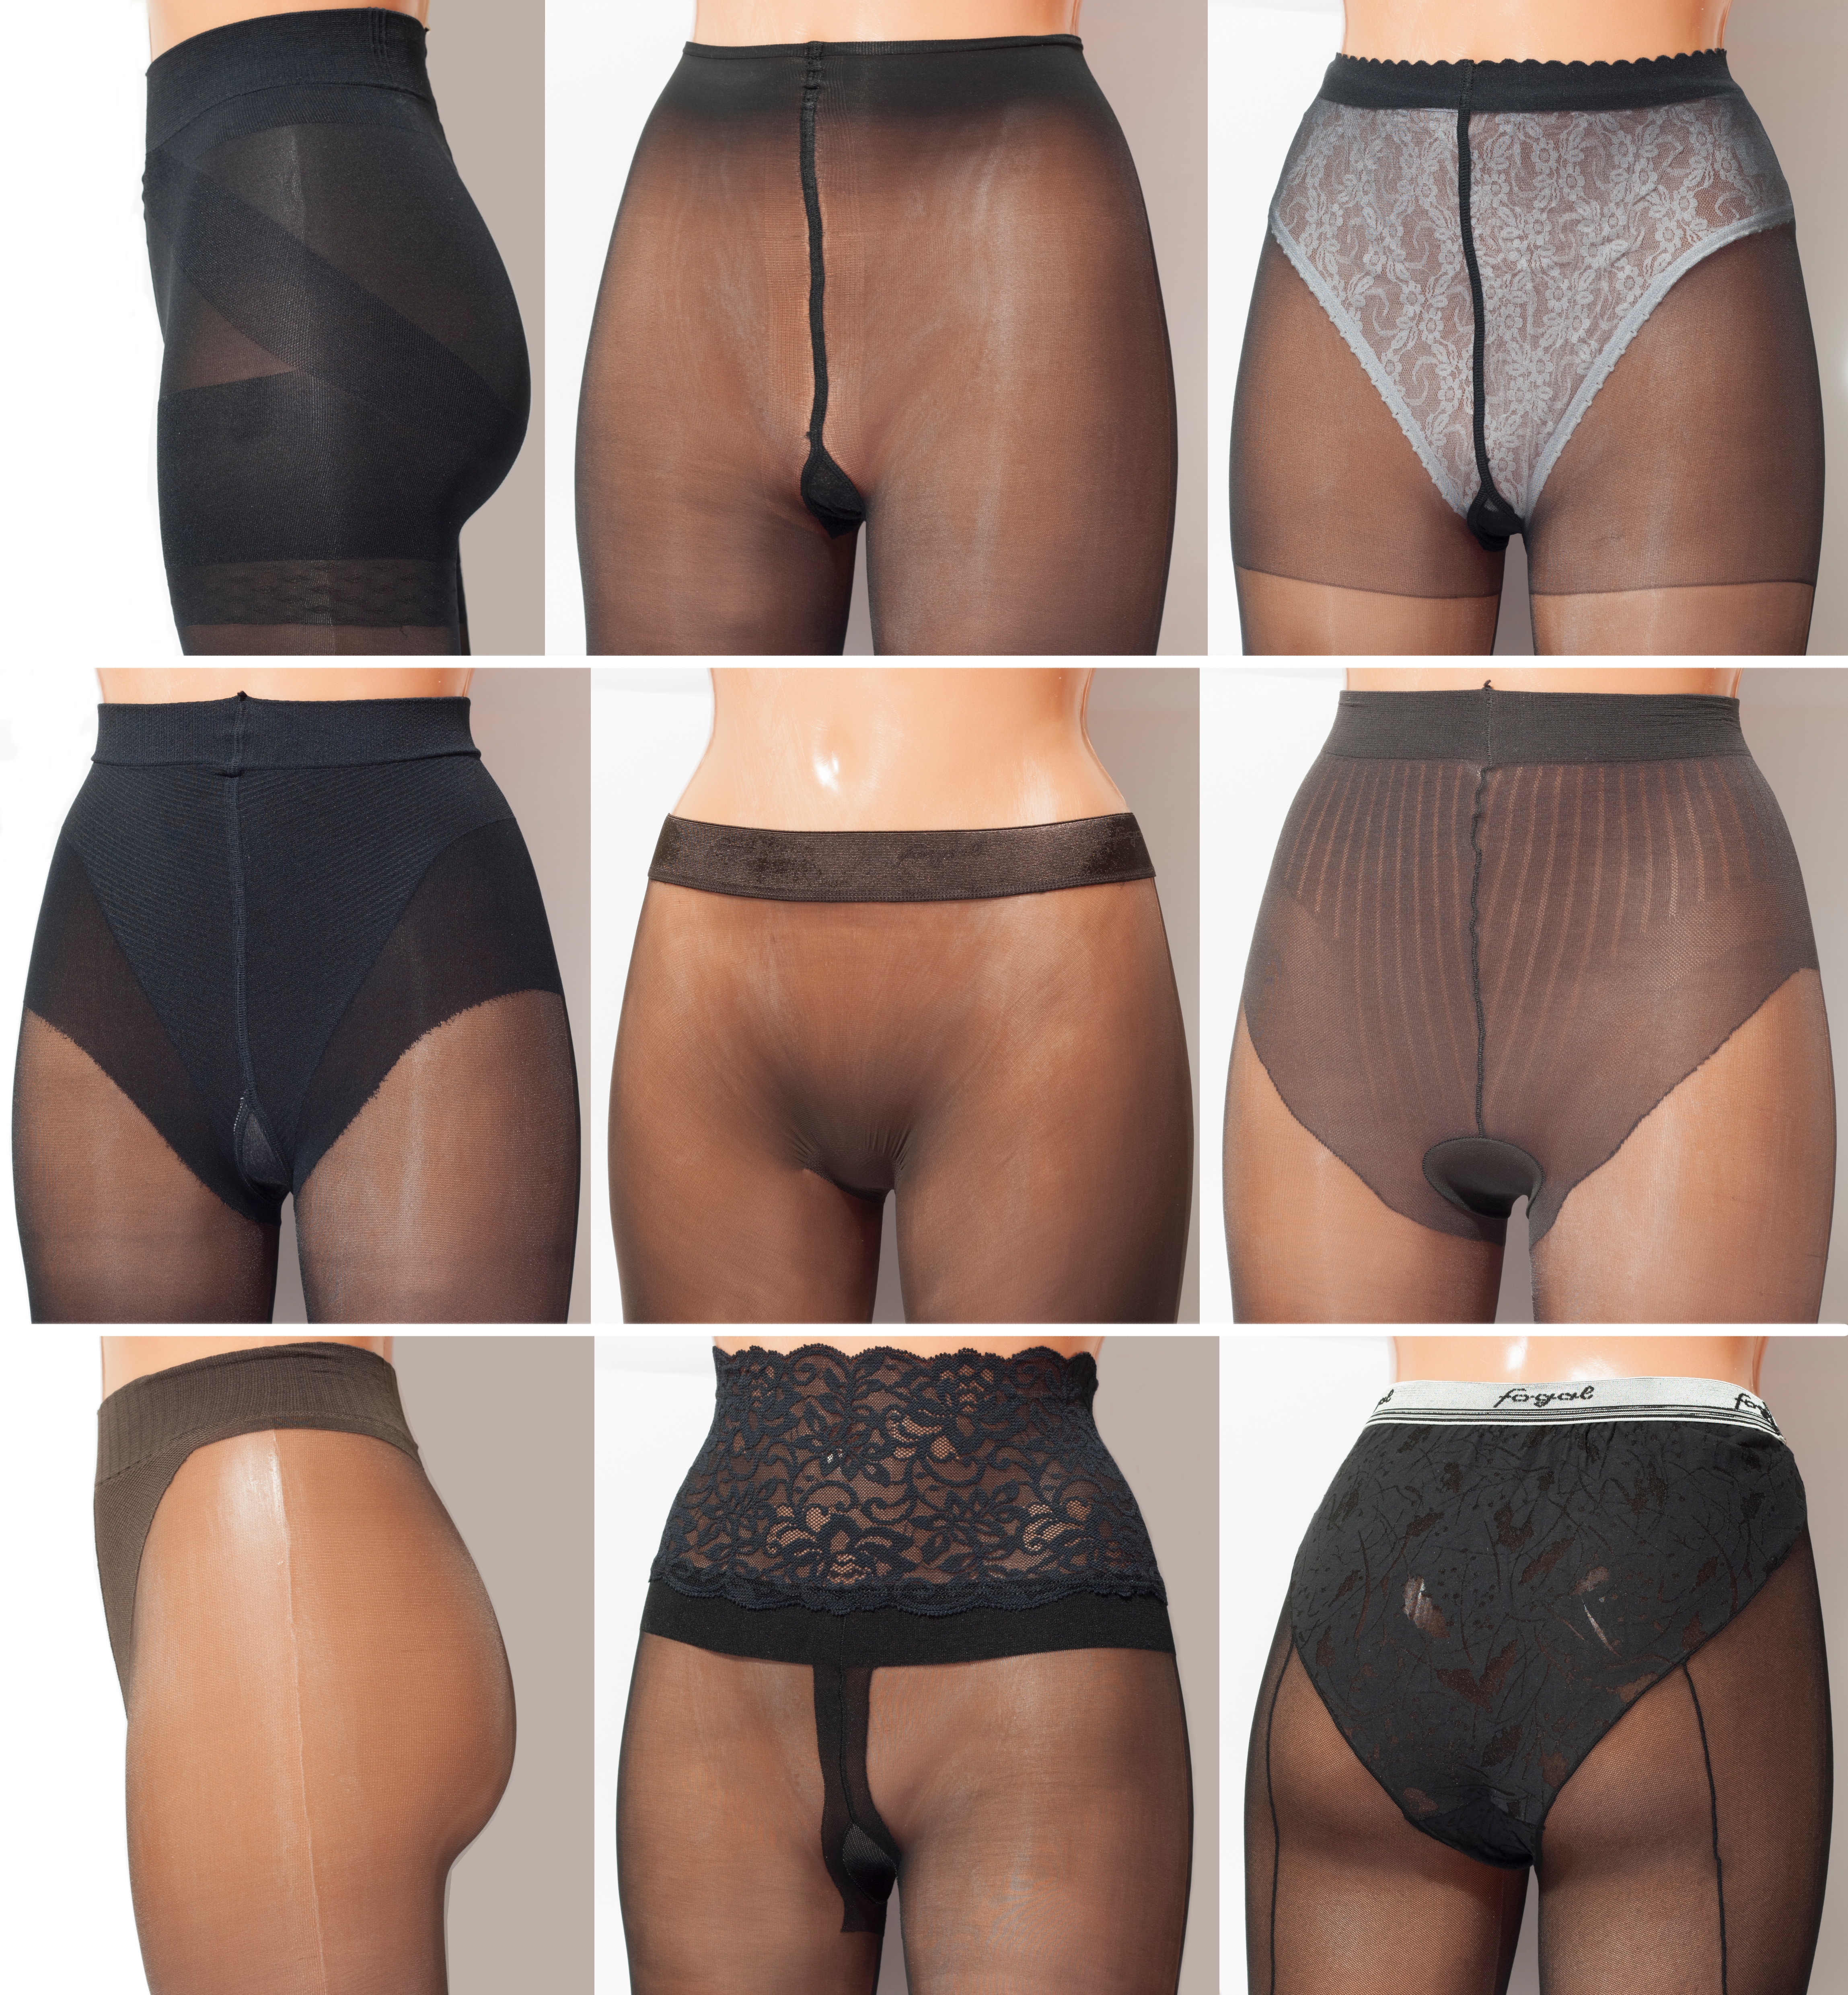 Best of Panties under pantyhose pics